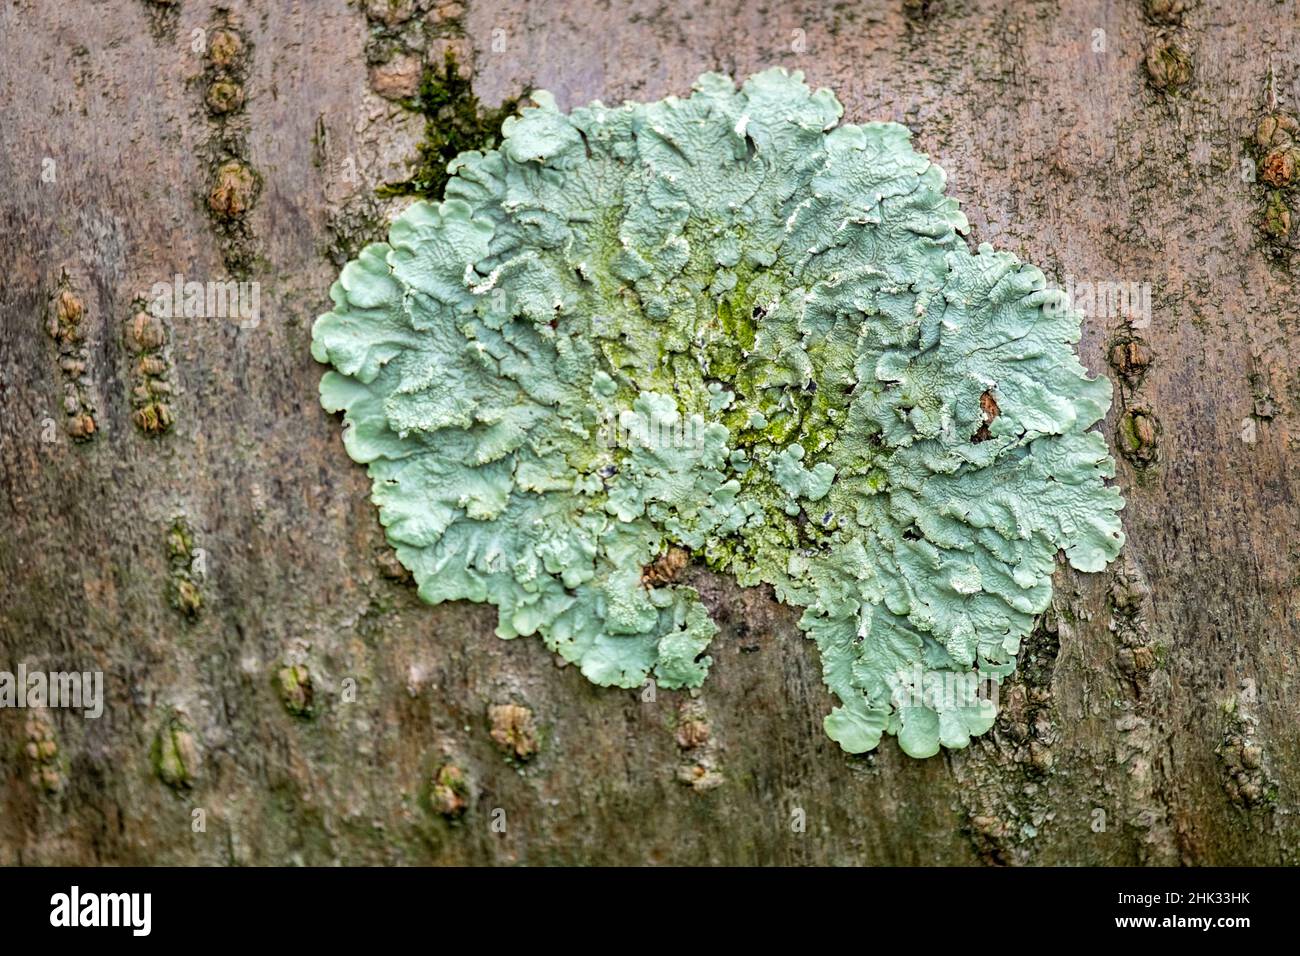 Green lichen on tree trunk, USA Stock Photo